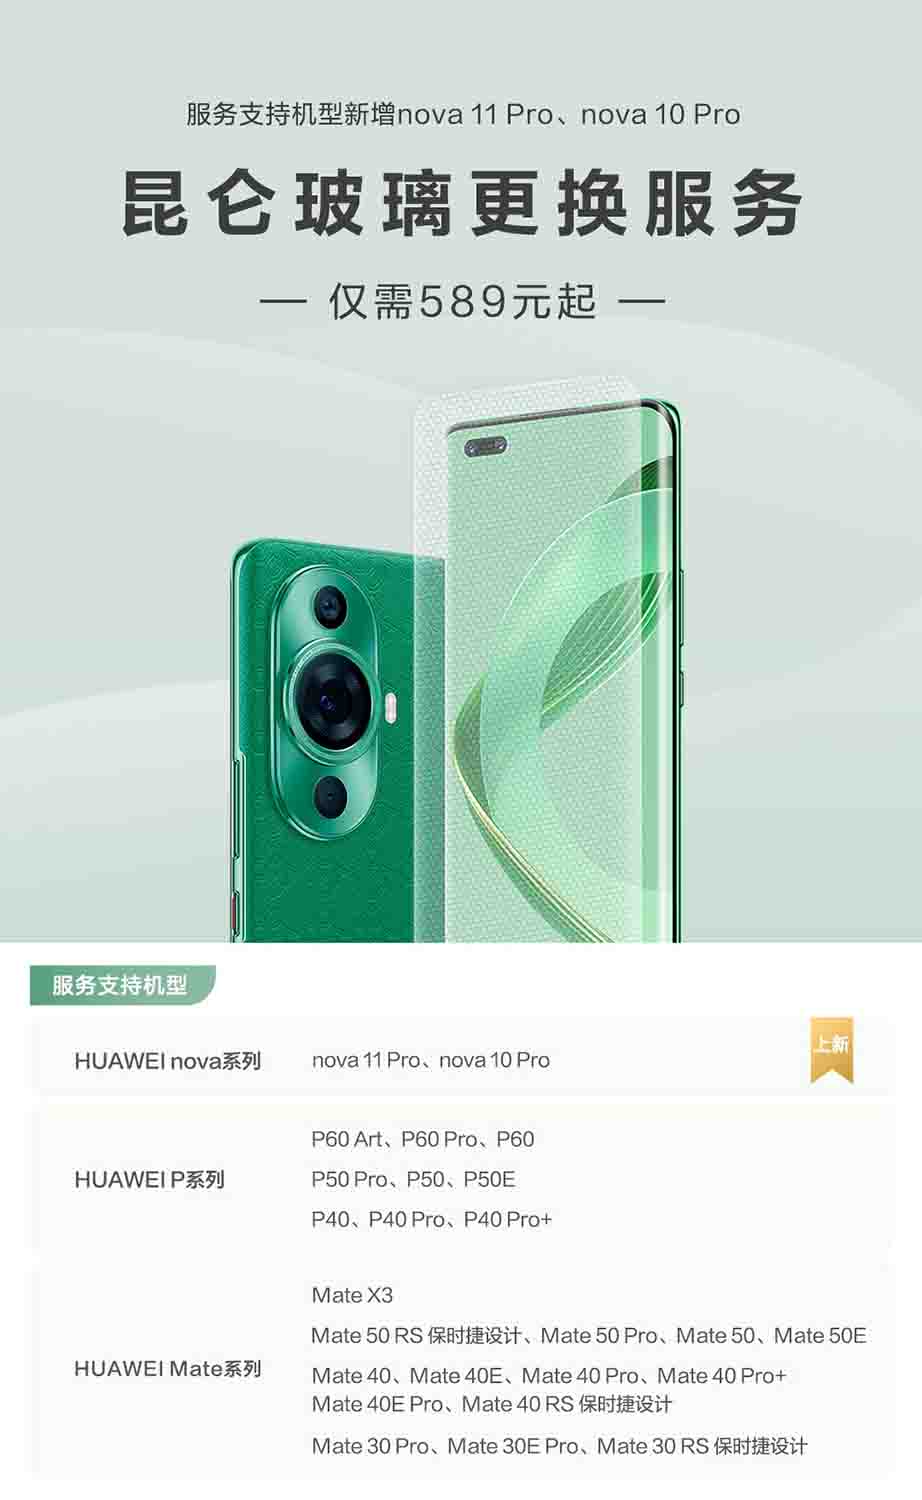 Huawei kunlun glass replacement service